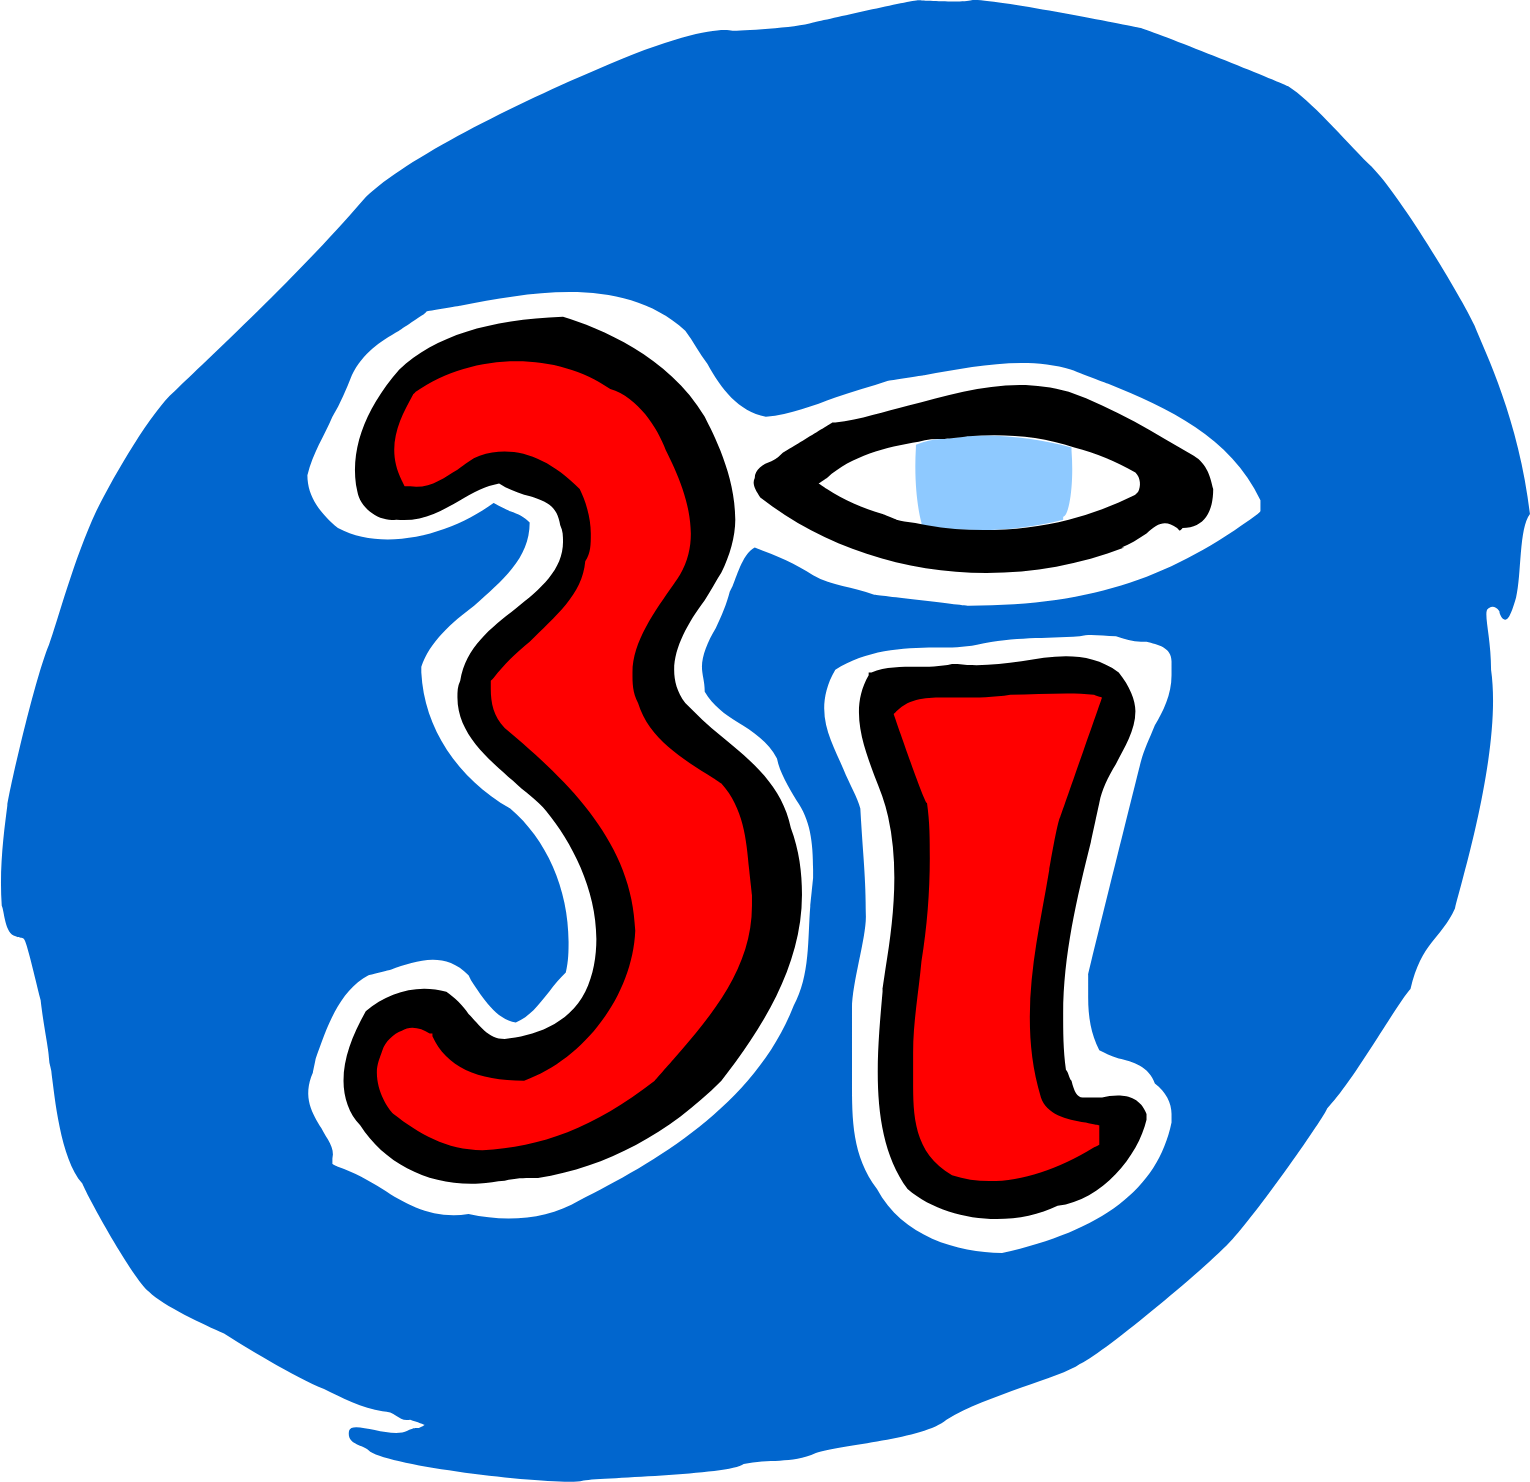 3i Group logo (PNG transparent)